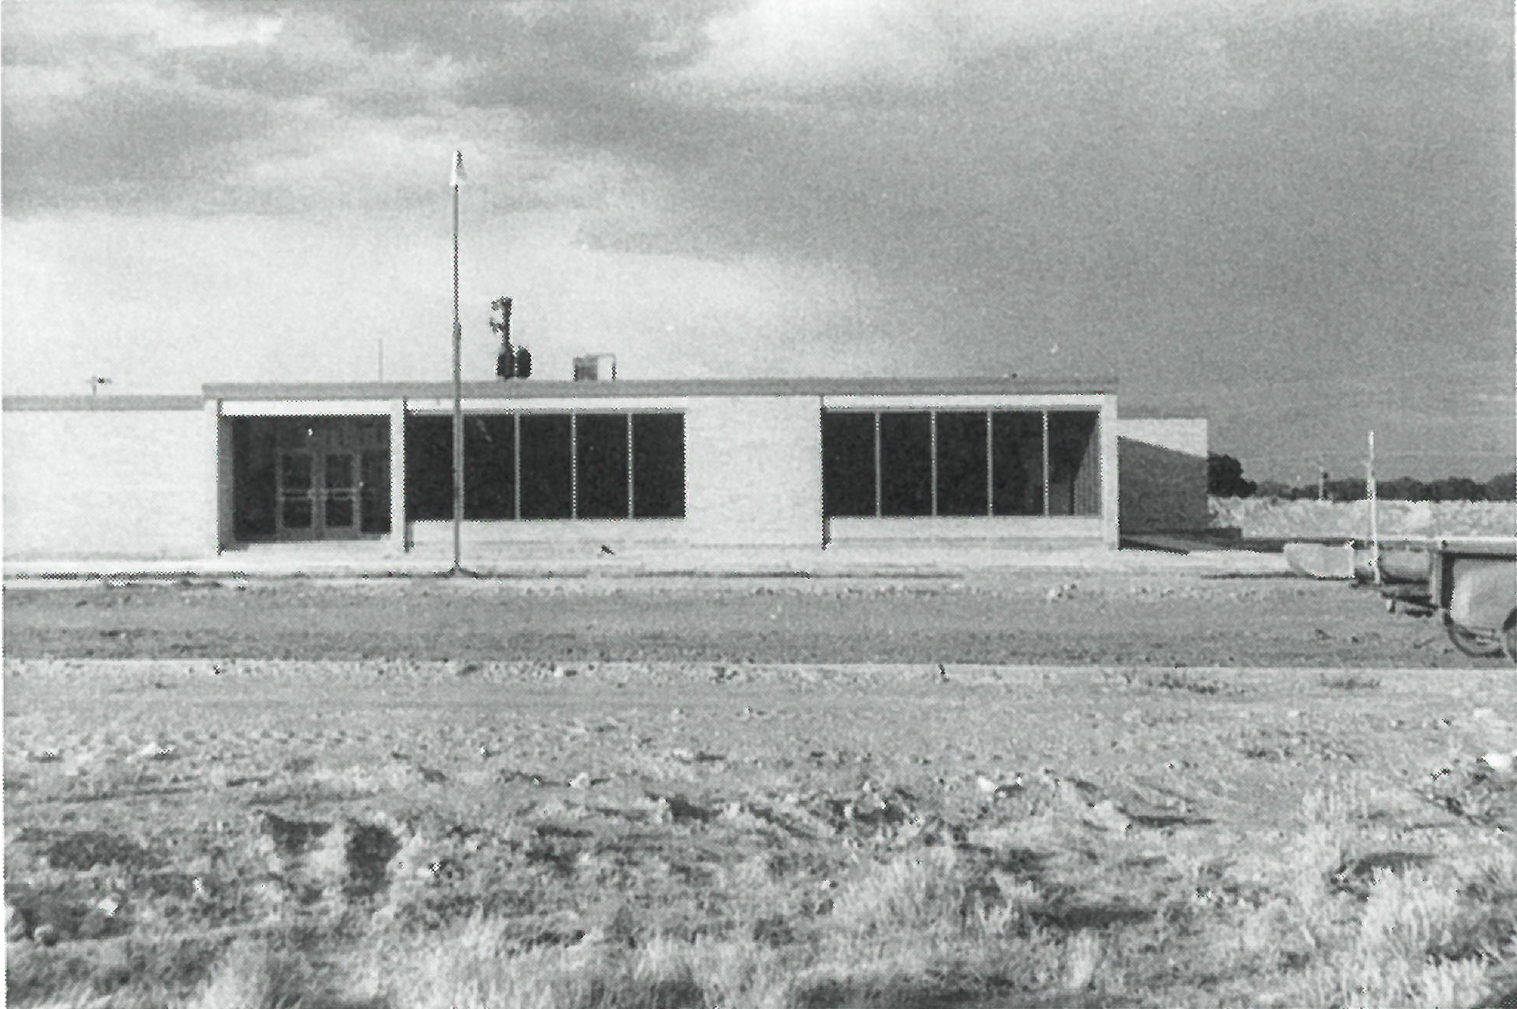 REC building in 1956